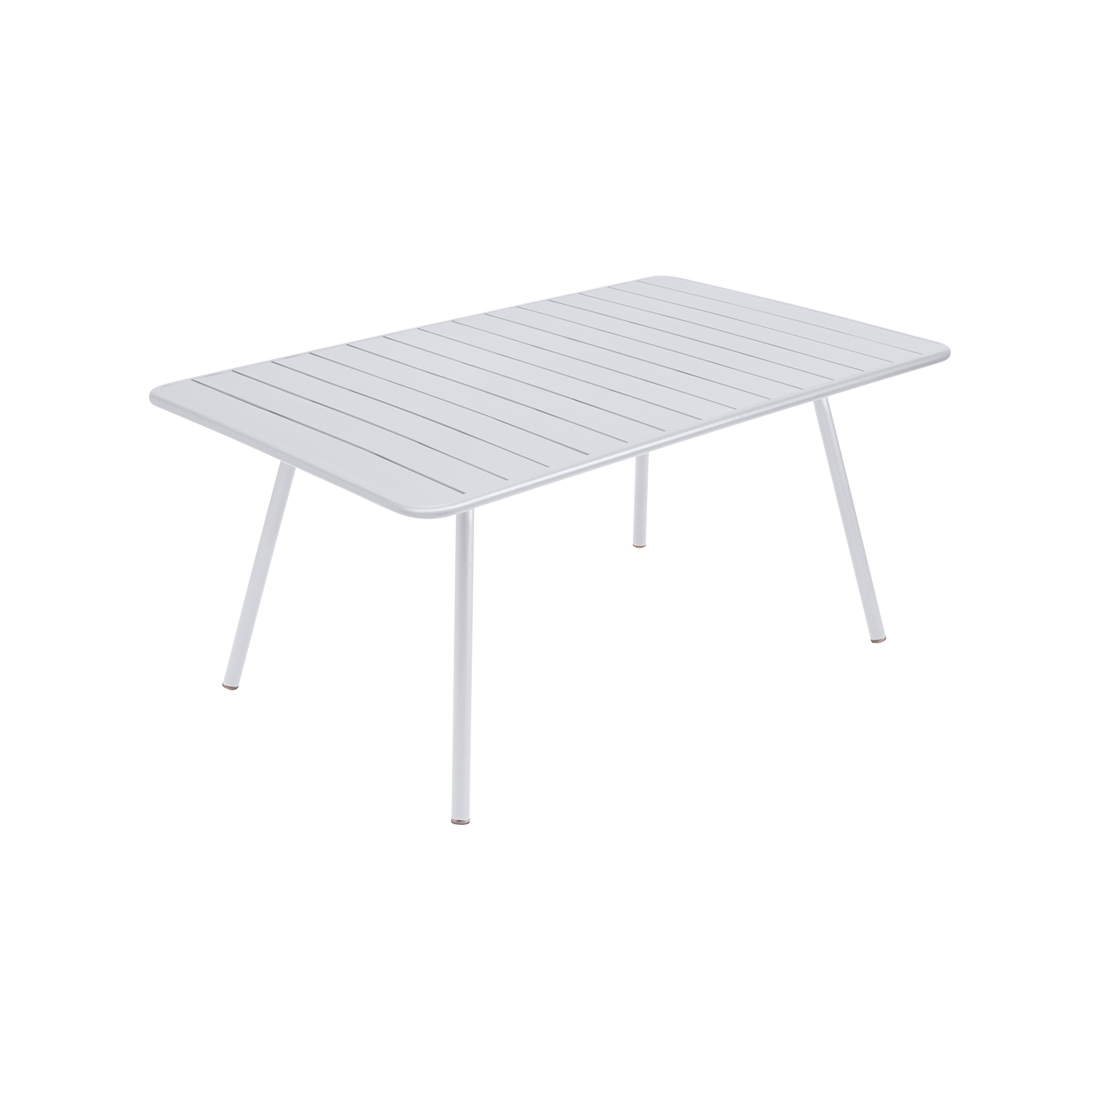 table de jardin, table metal, table fermob, table blanche